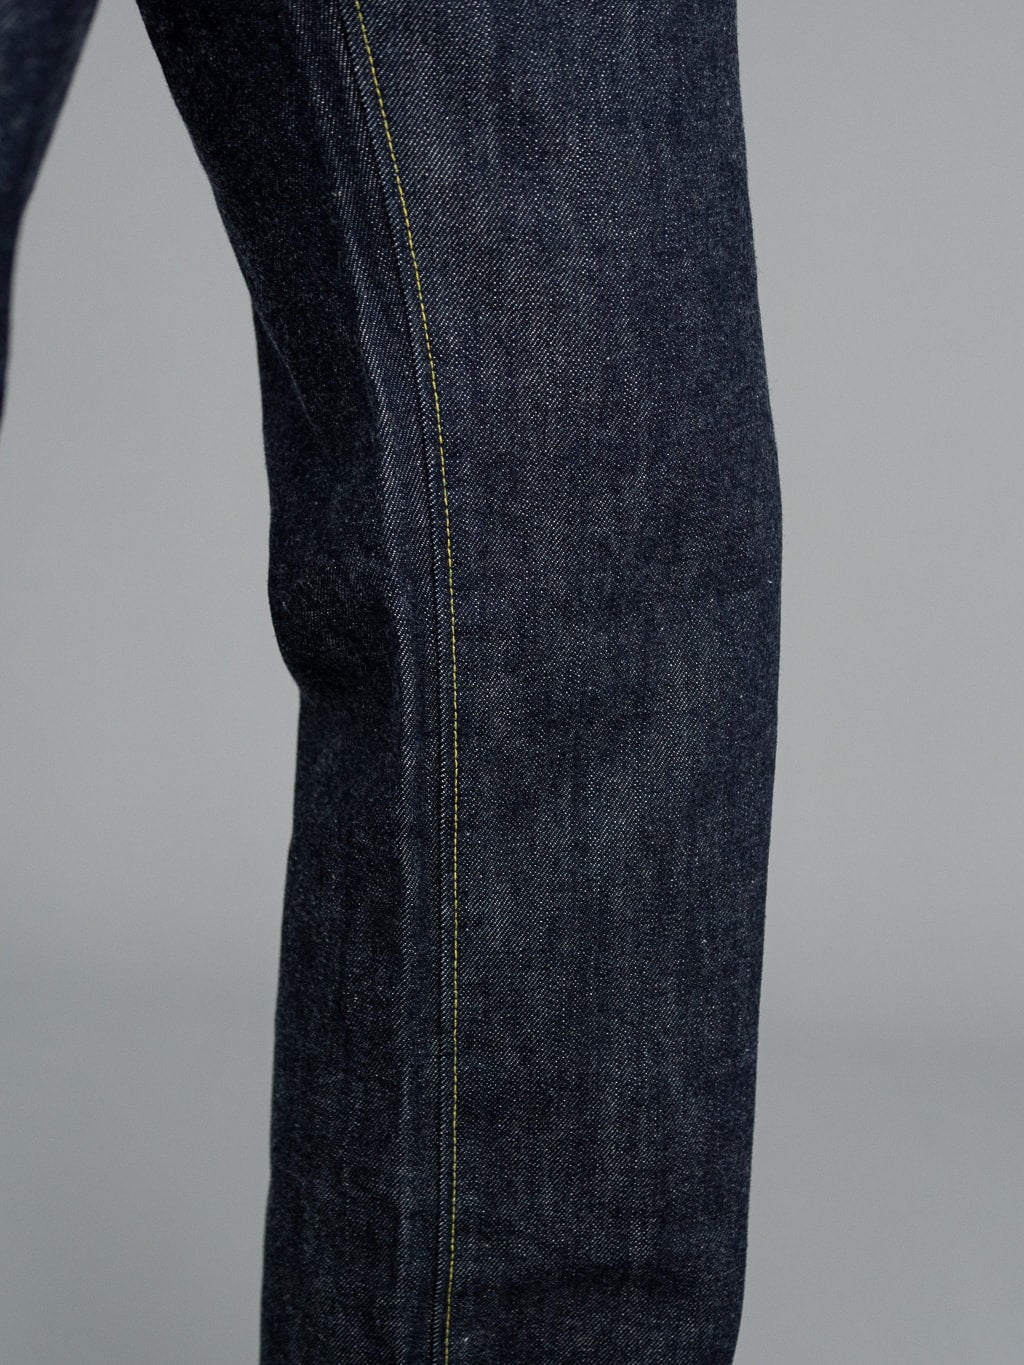 sugar cane SC41947 14.25oz denim 1947 model regular straight jeans inseam